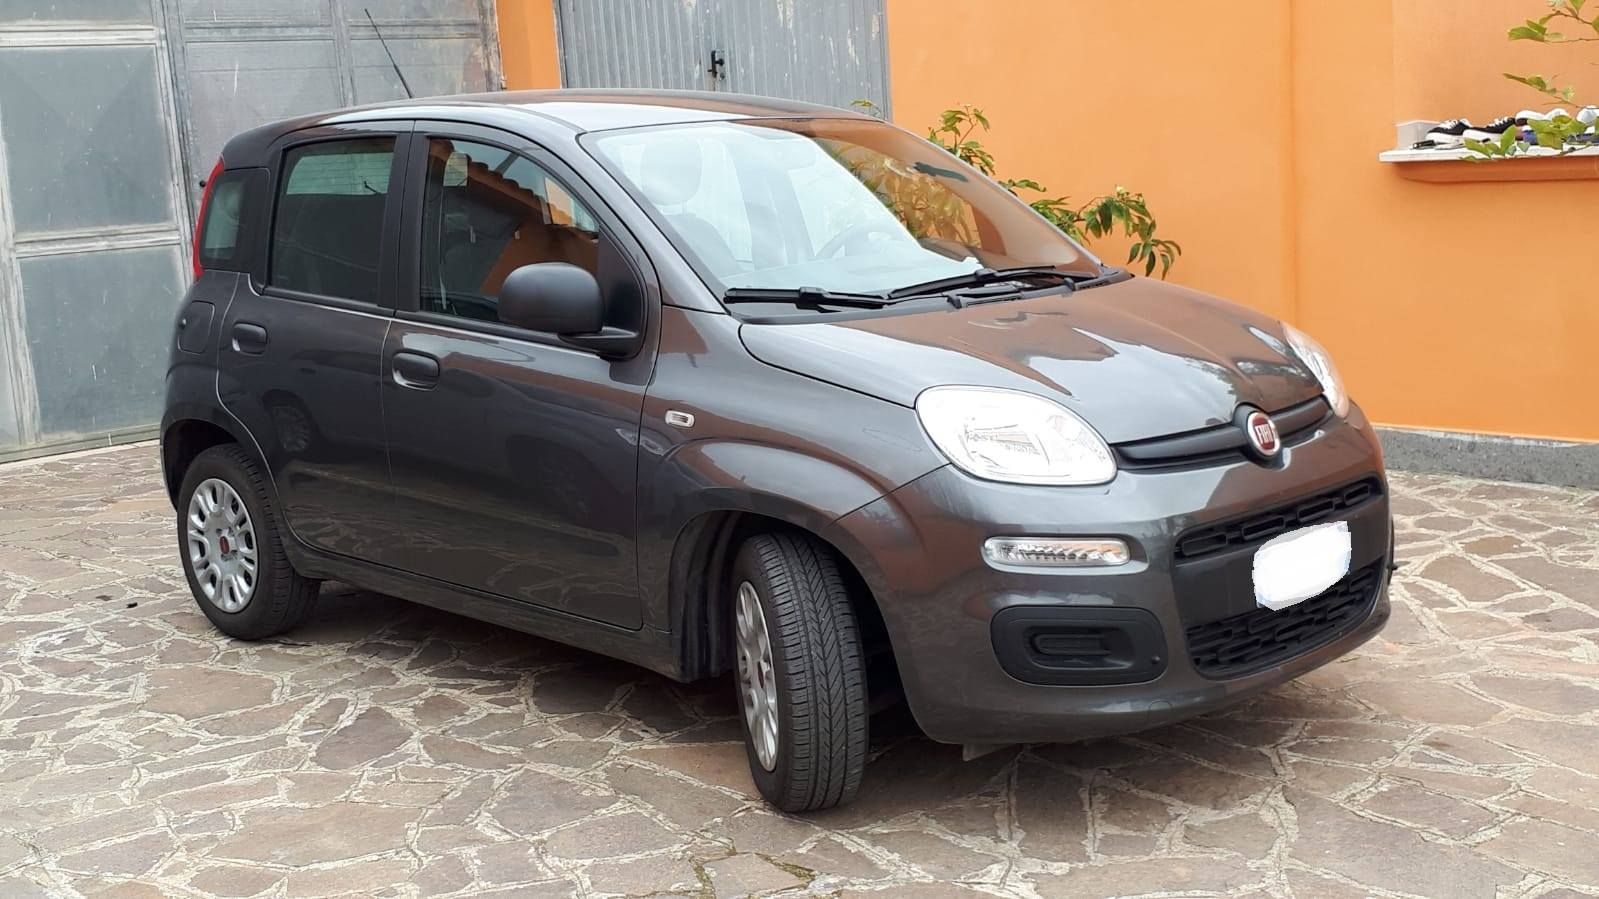 Fiat Panda Easy 1.2 69 CV solo 7400 km. Euro 8.200,00 + p.p.!